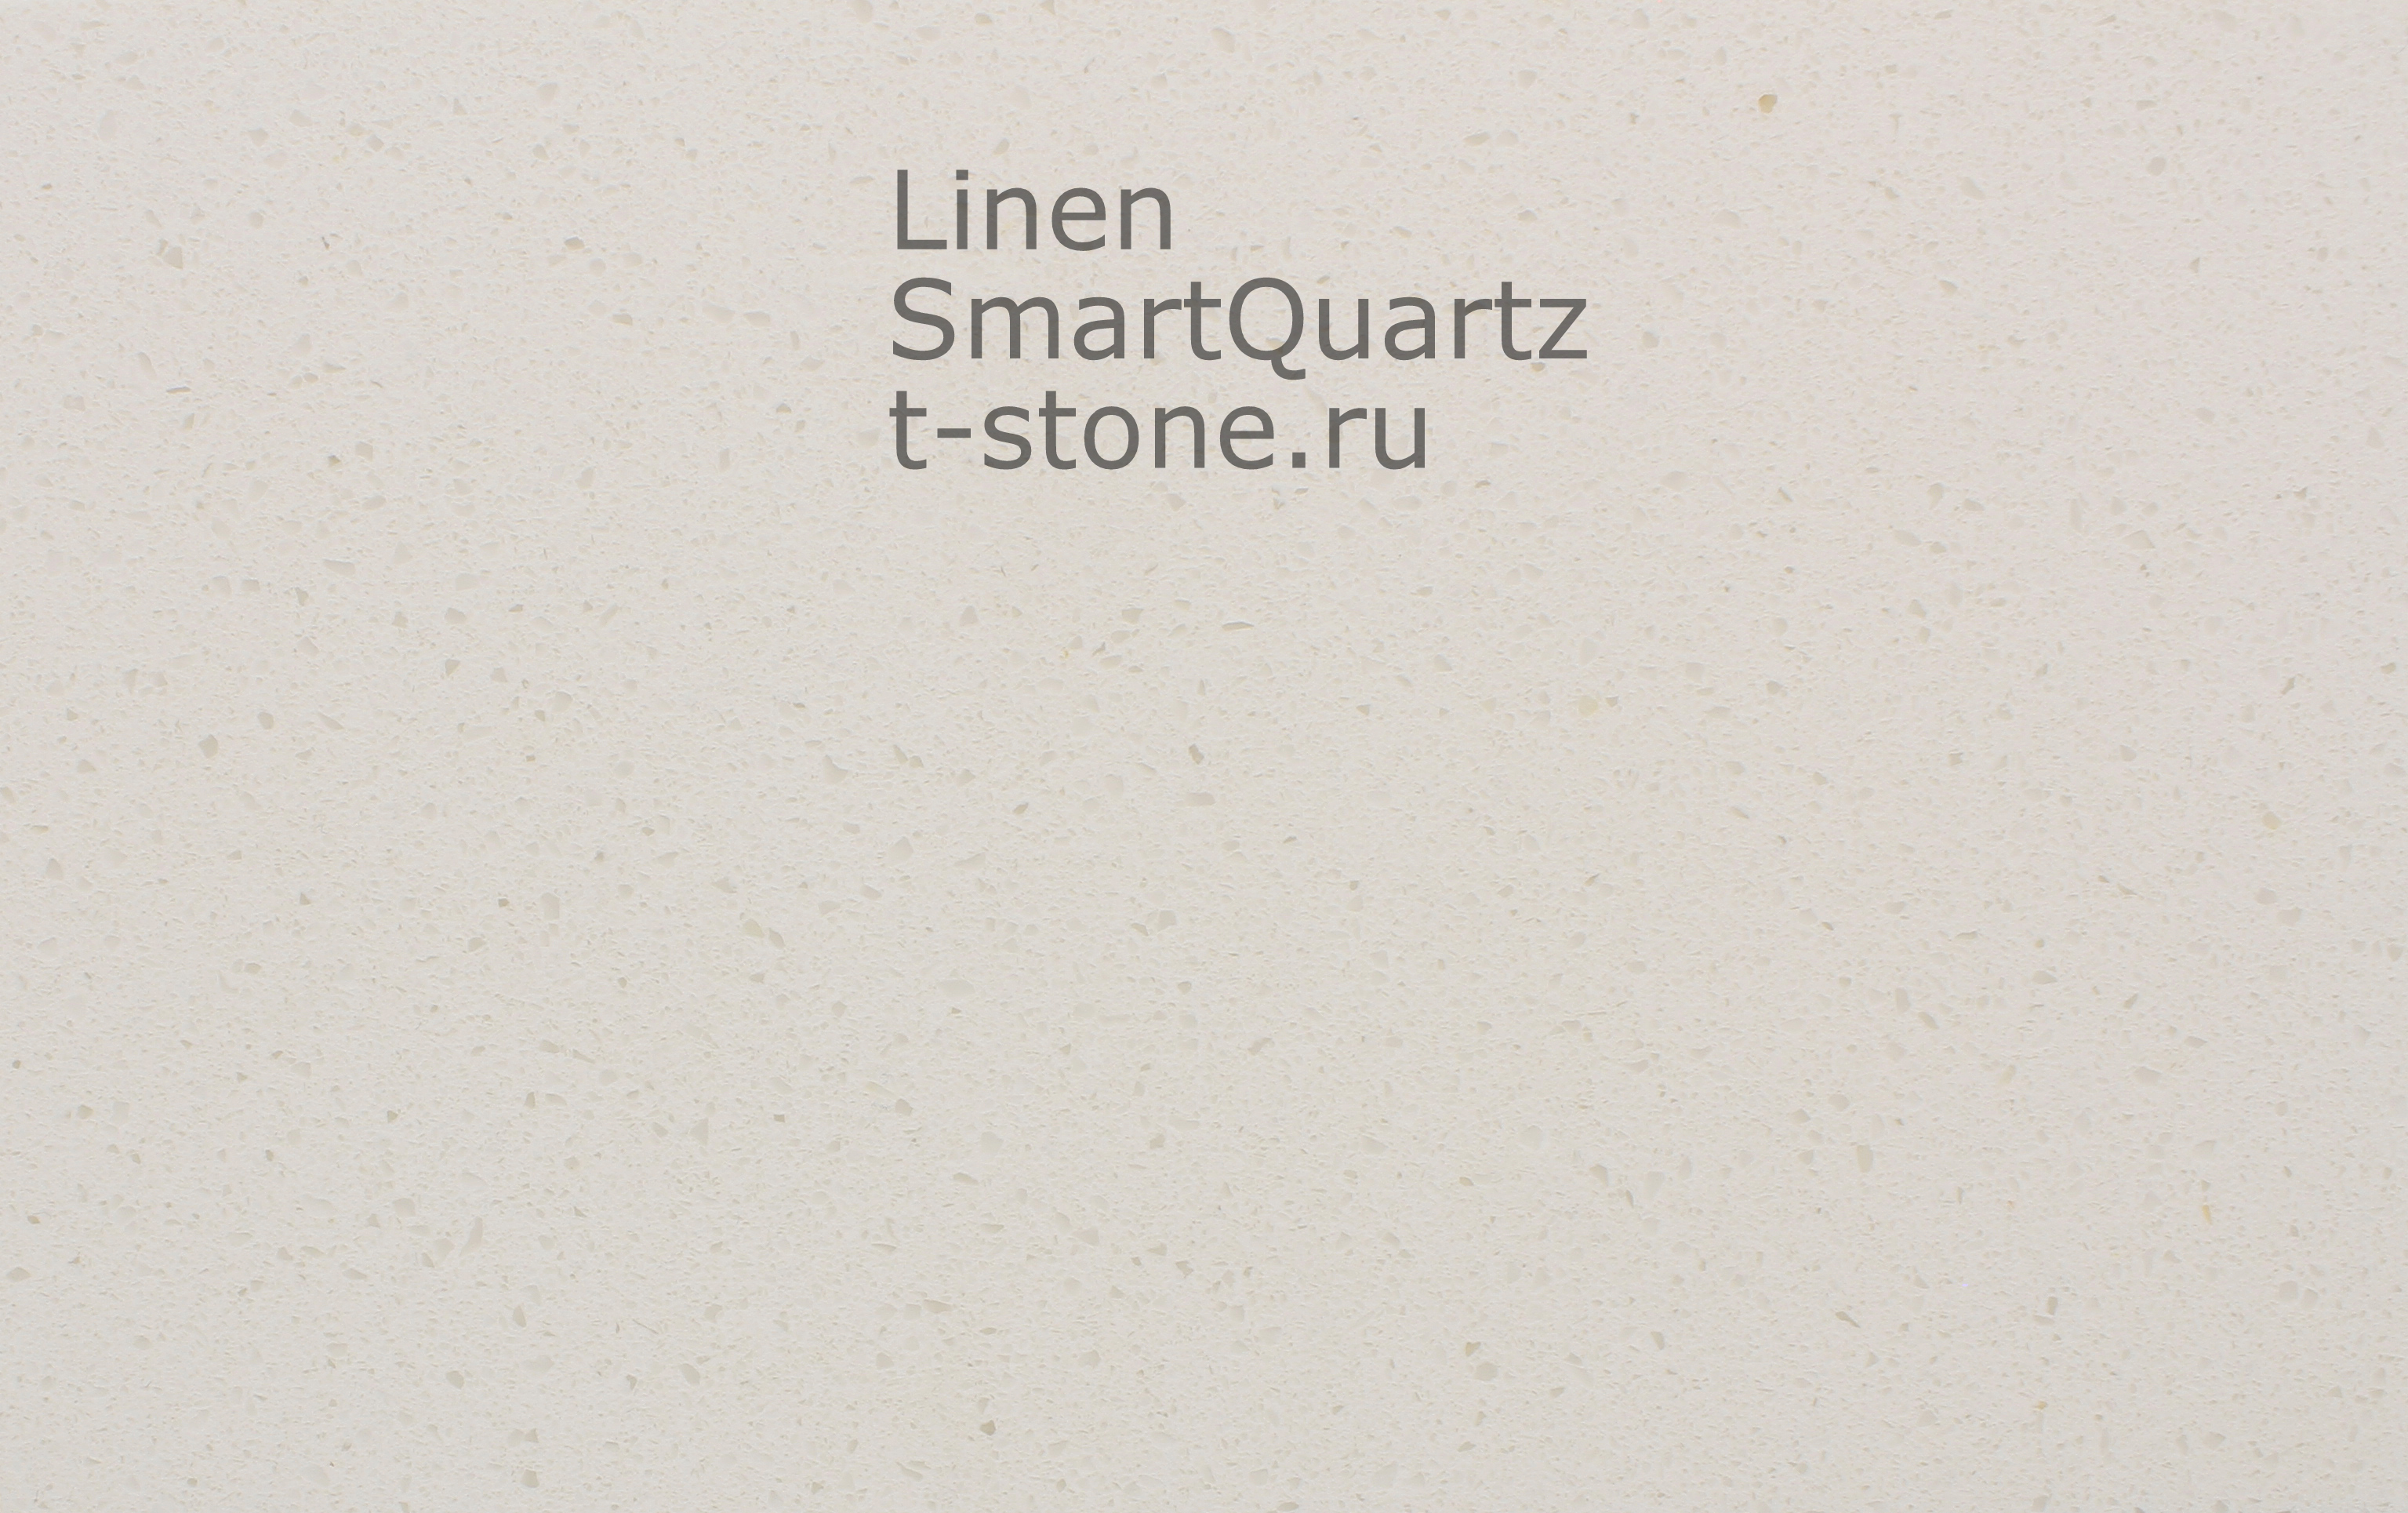 Linen / Линен